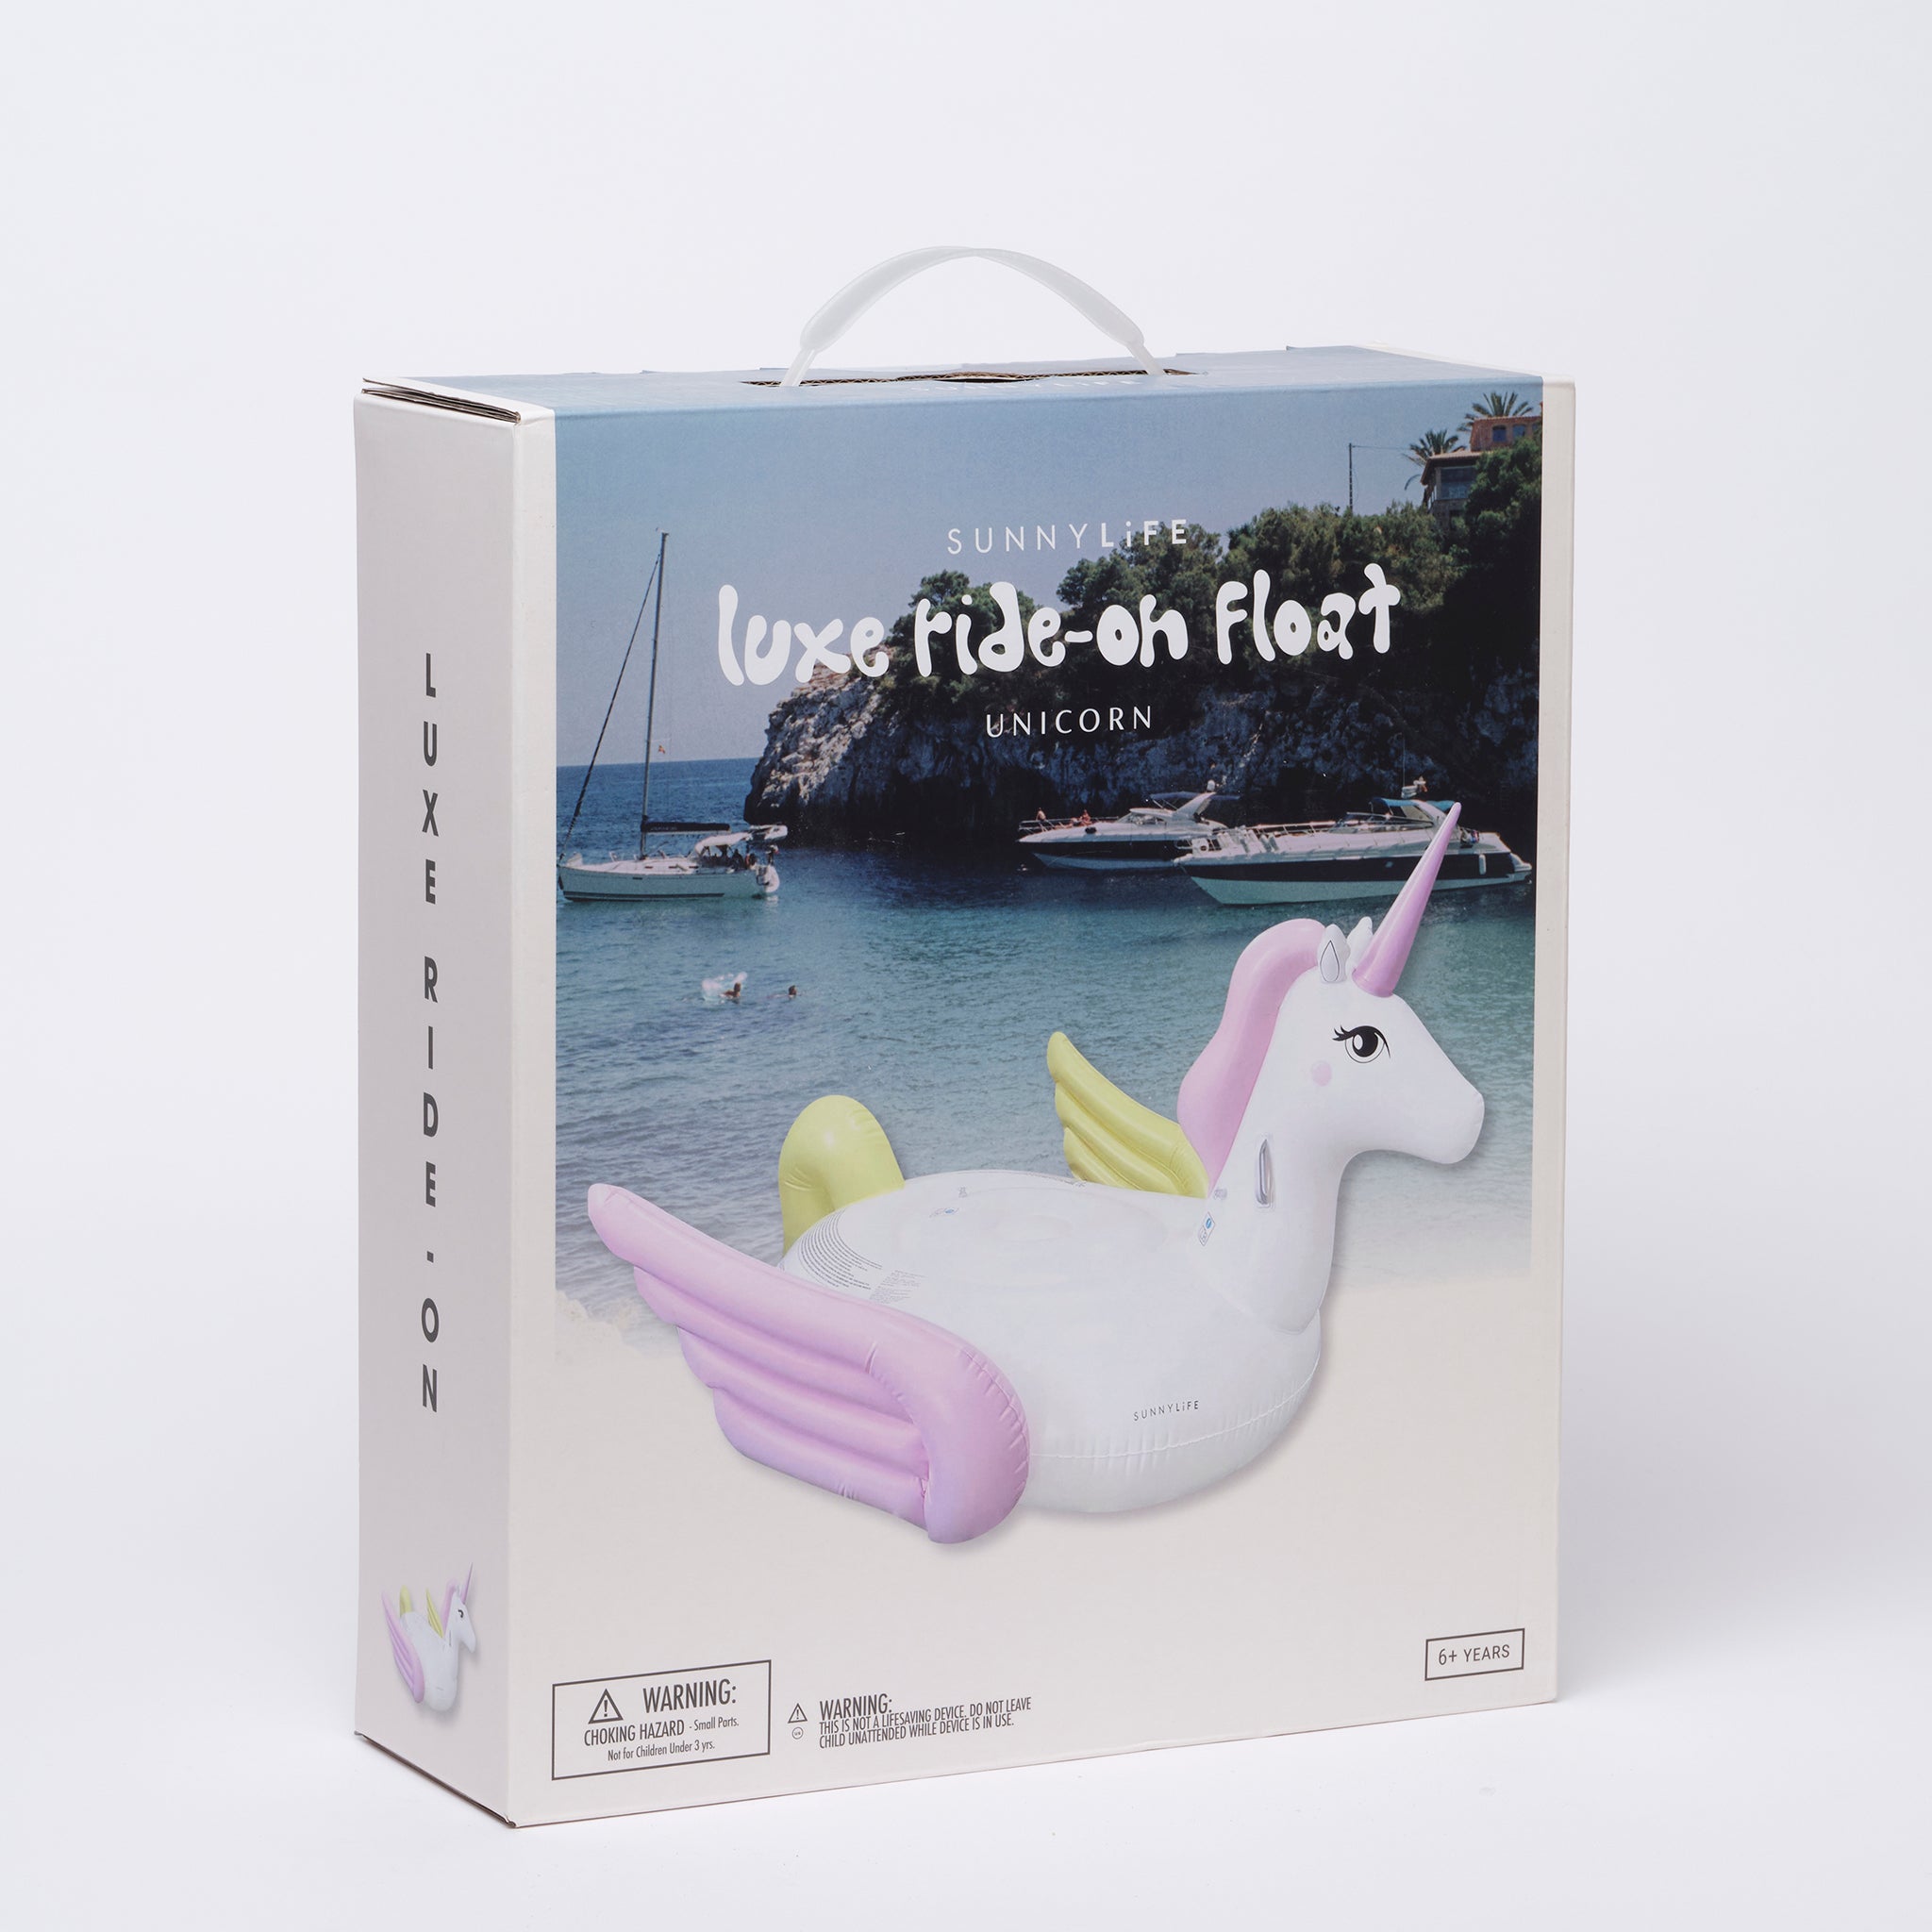 SUNNYLiFE | Luxe Ride-On Float | Unicorn Pastel